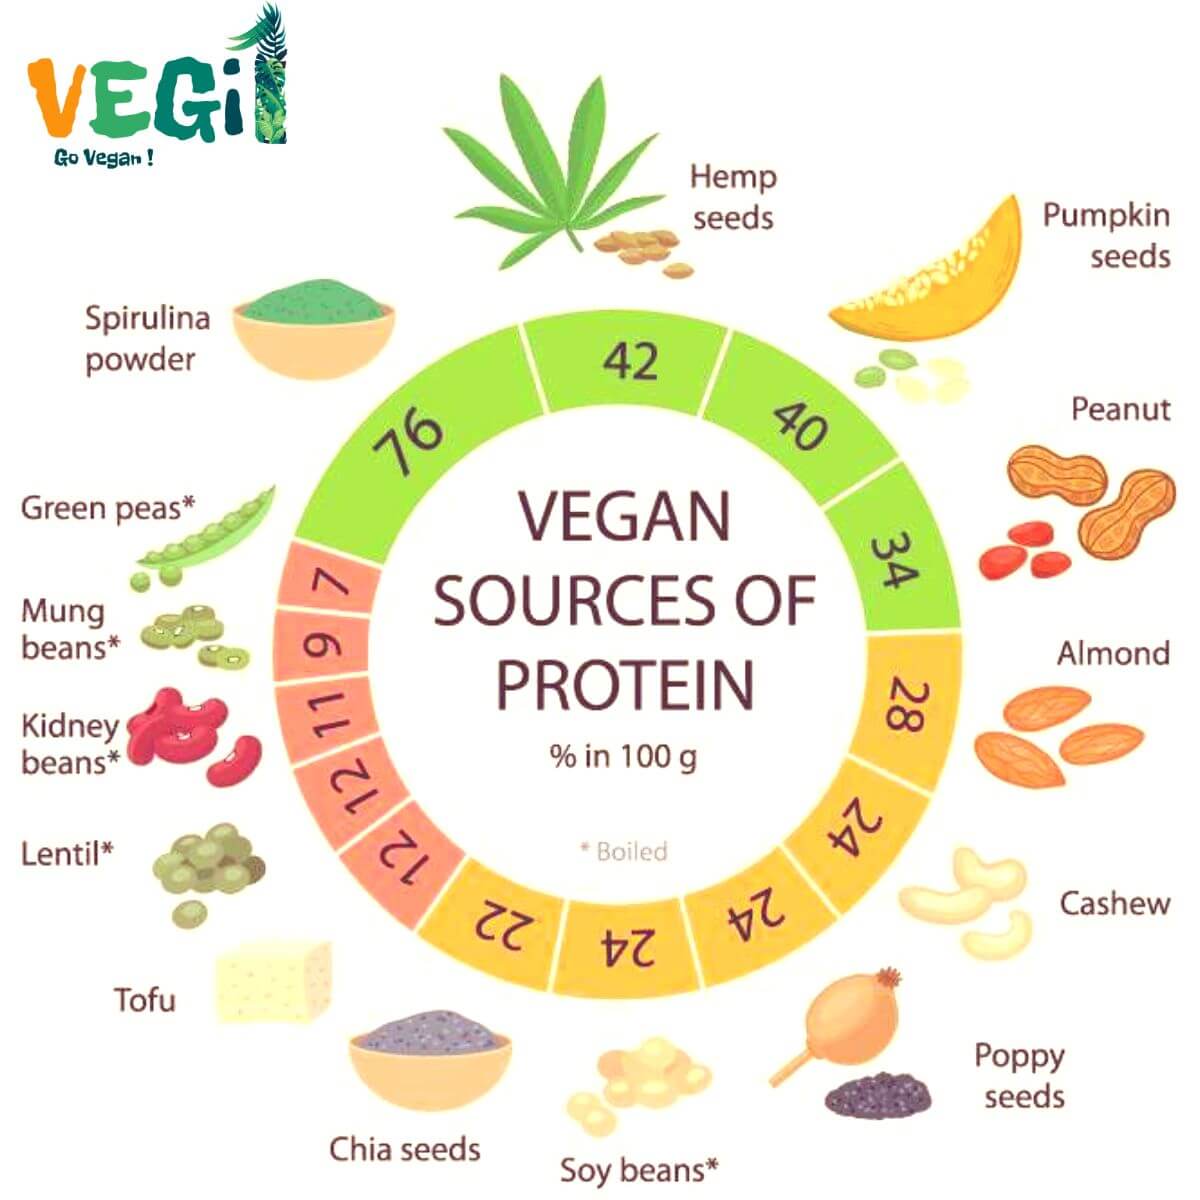 Highest protein vegan foods per 100g